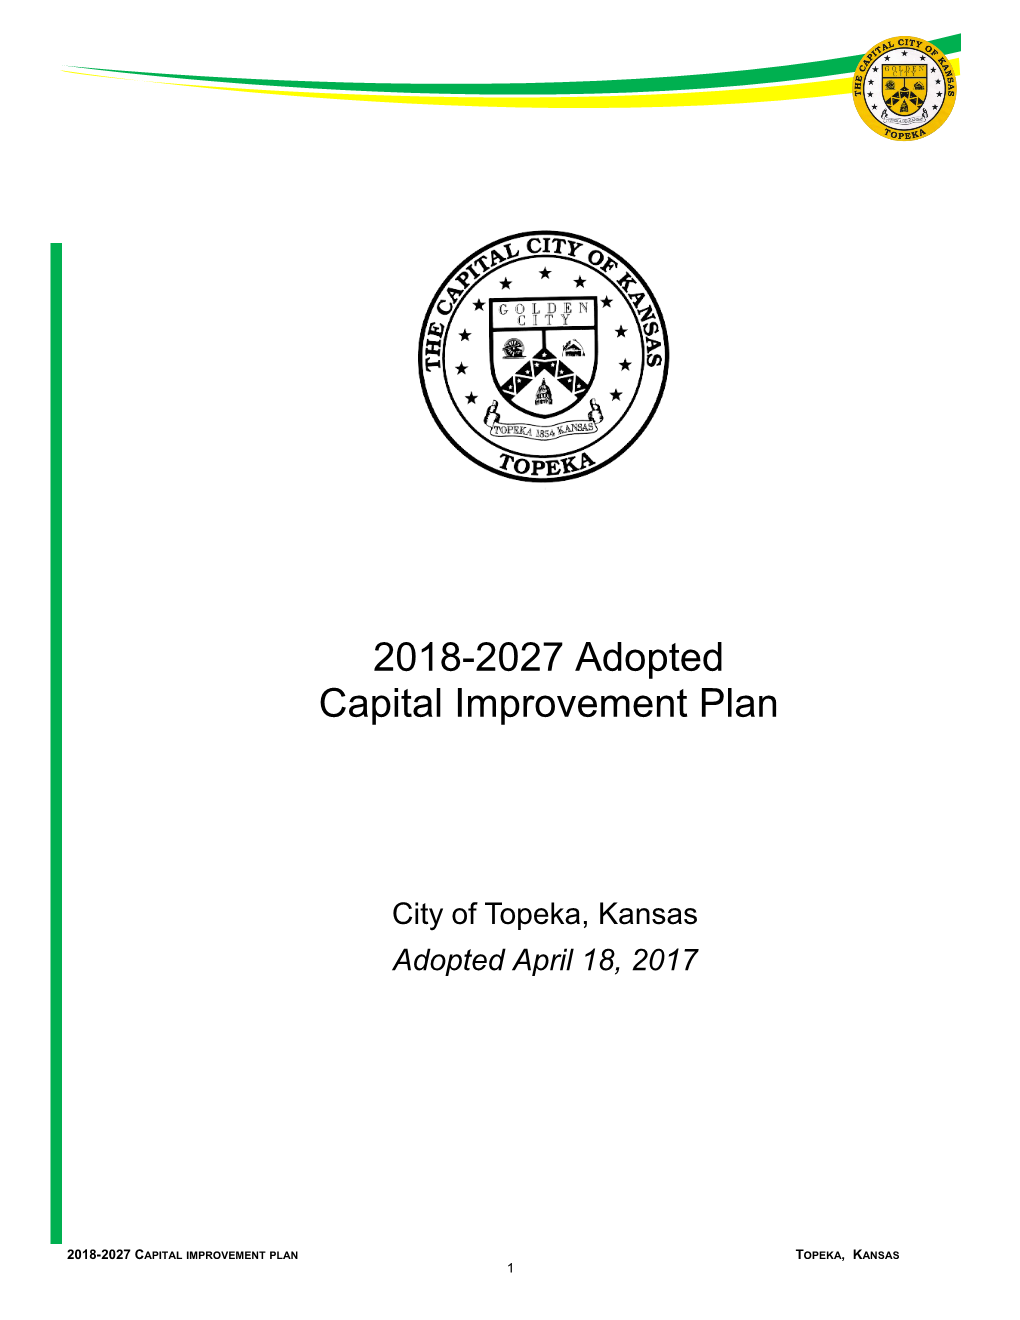 2027 Adopted Capital Improvement Plan